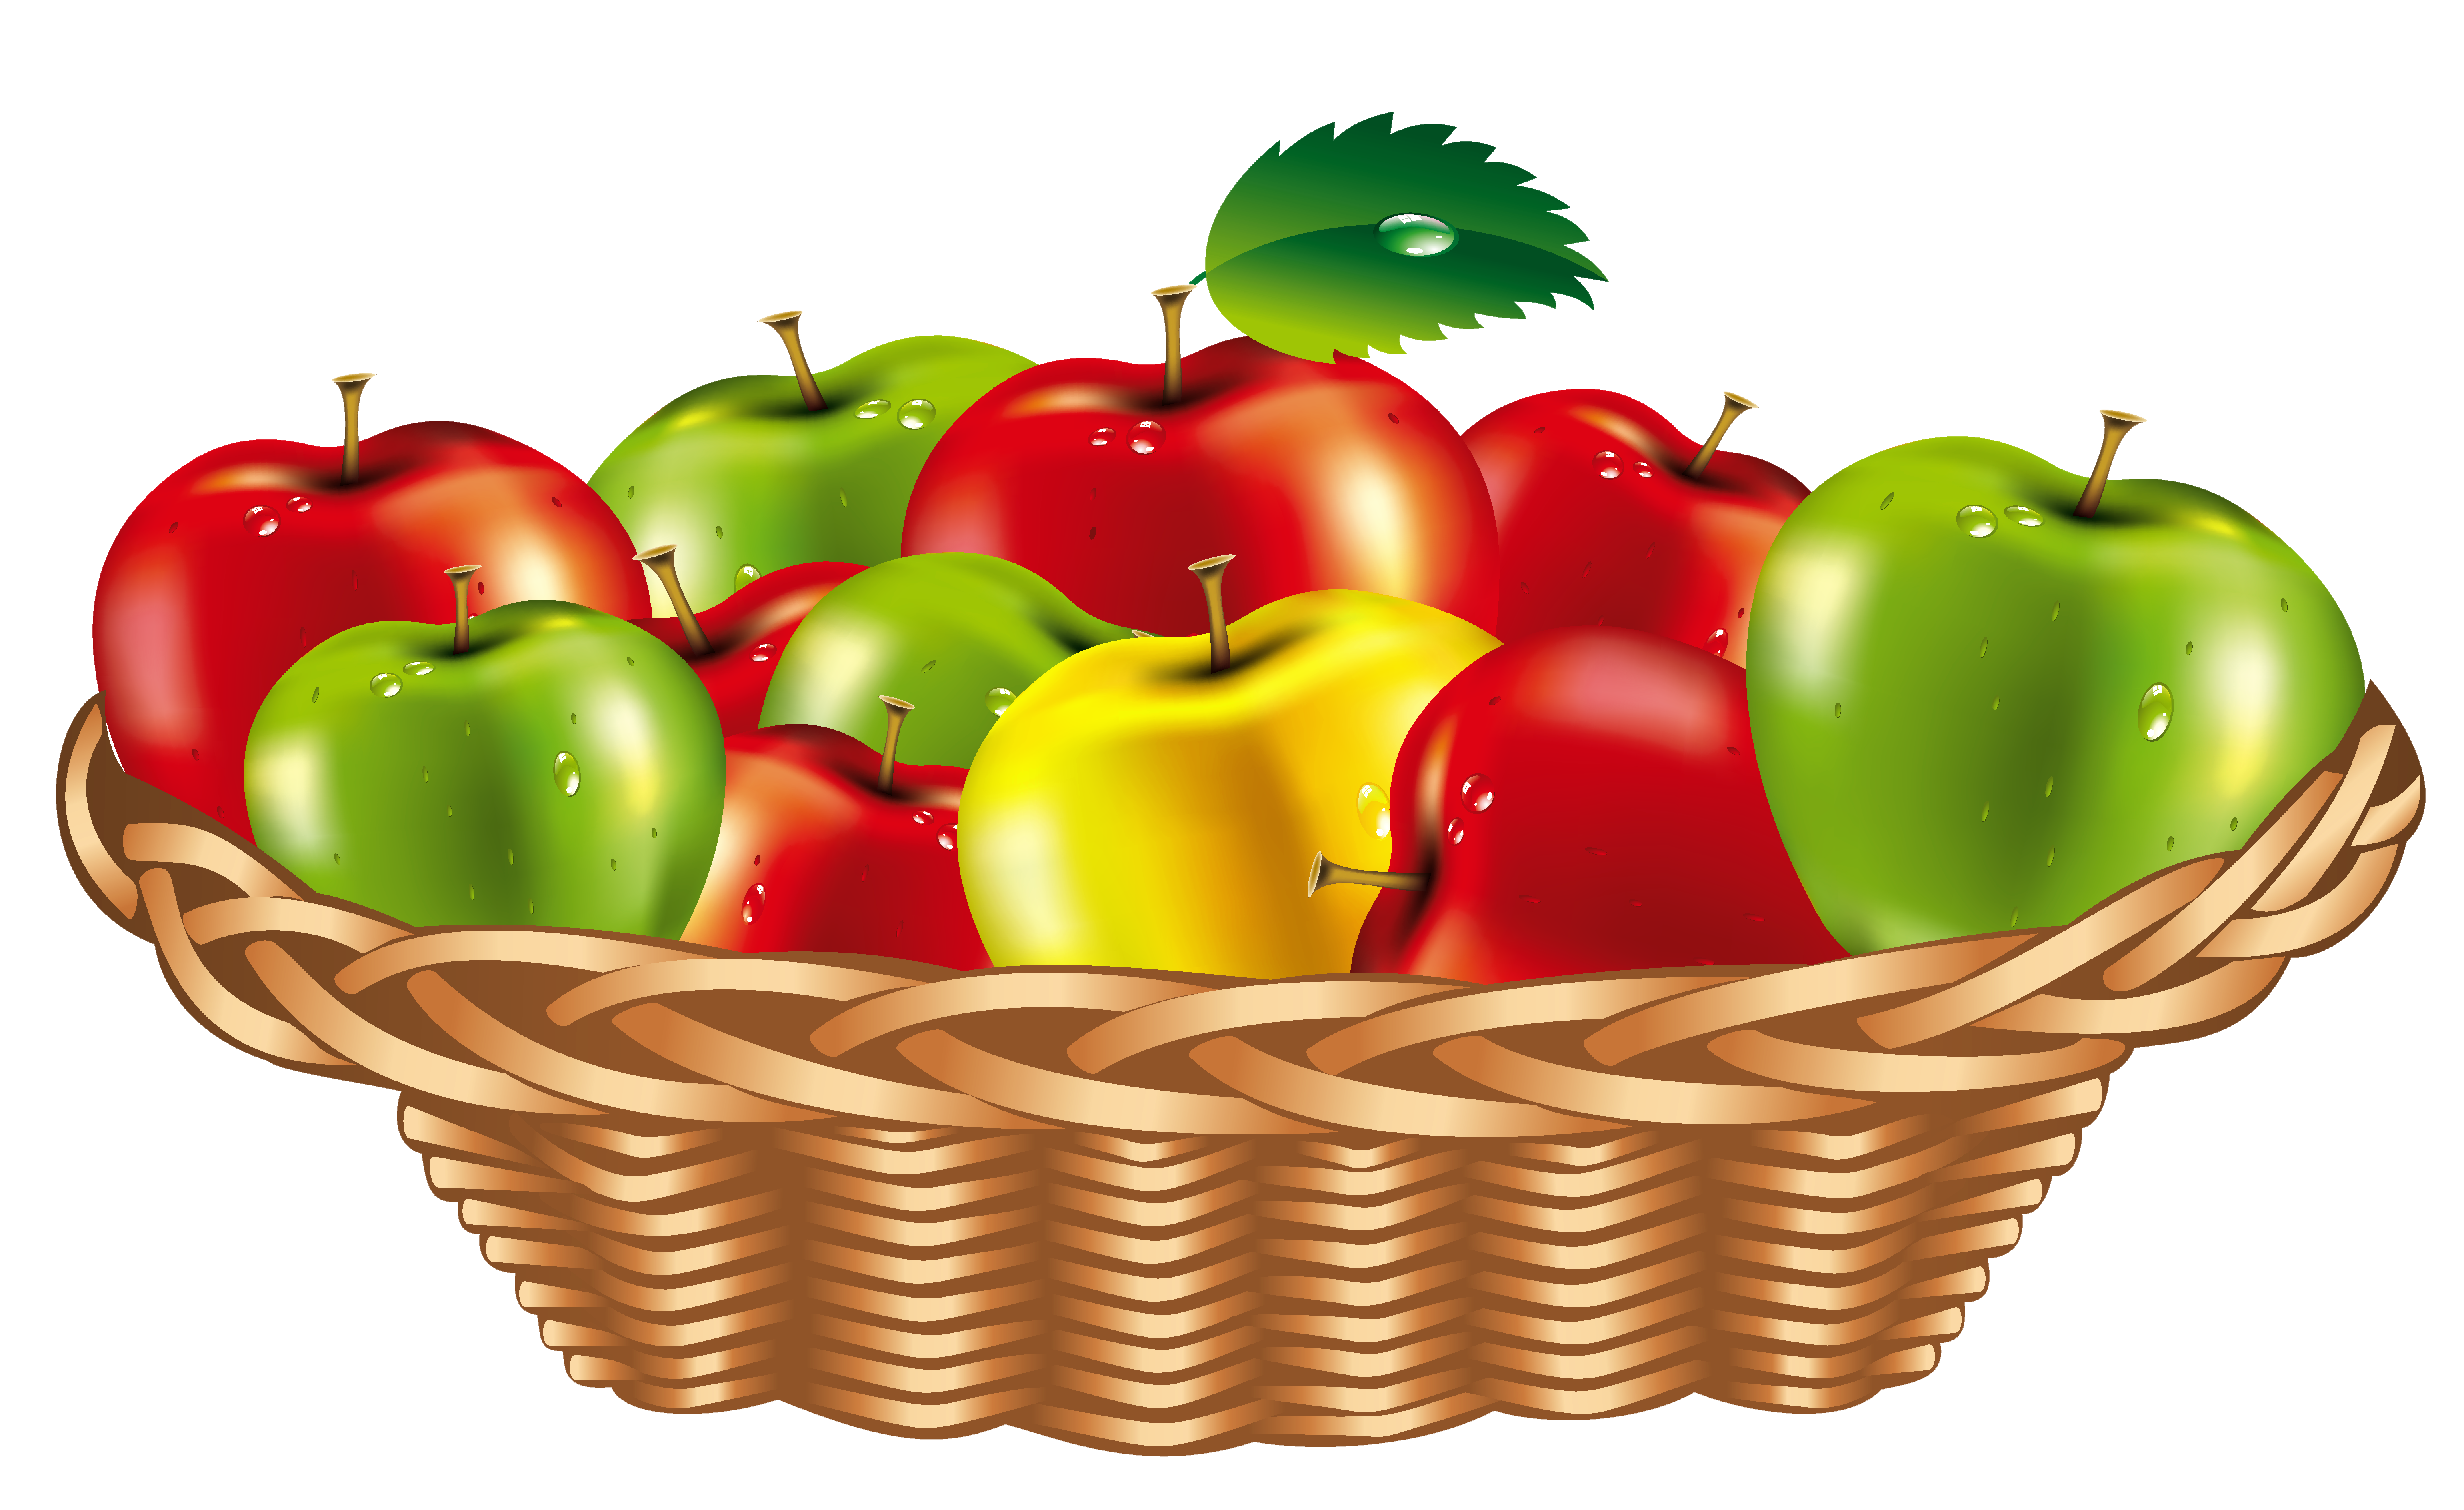 Free Vegetable Basket Cliparts, Download Free Vegetable Basket Cliparts